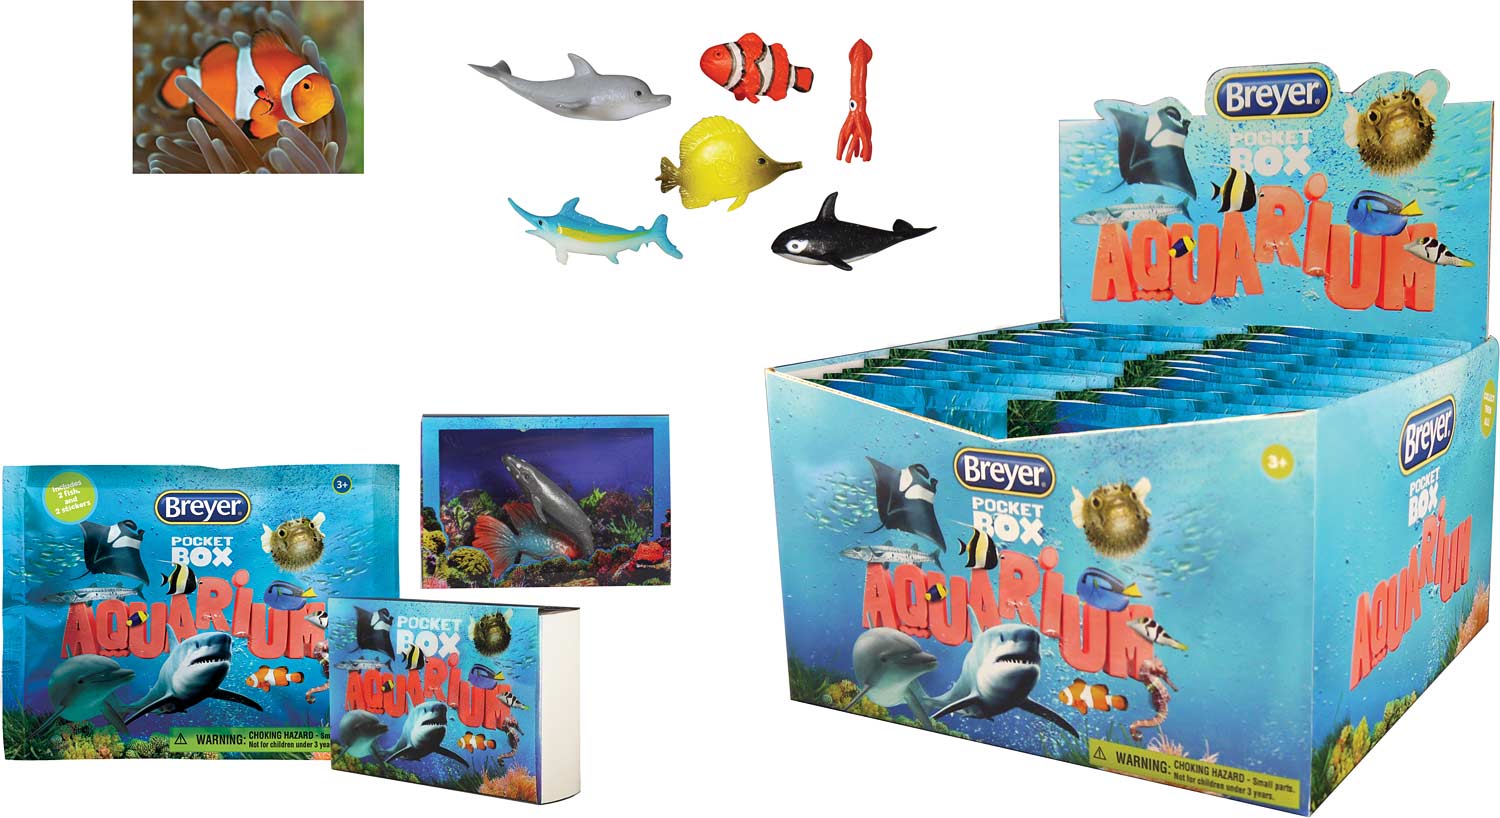 Pocket Box Aquarium - Kite and Kaboodle